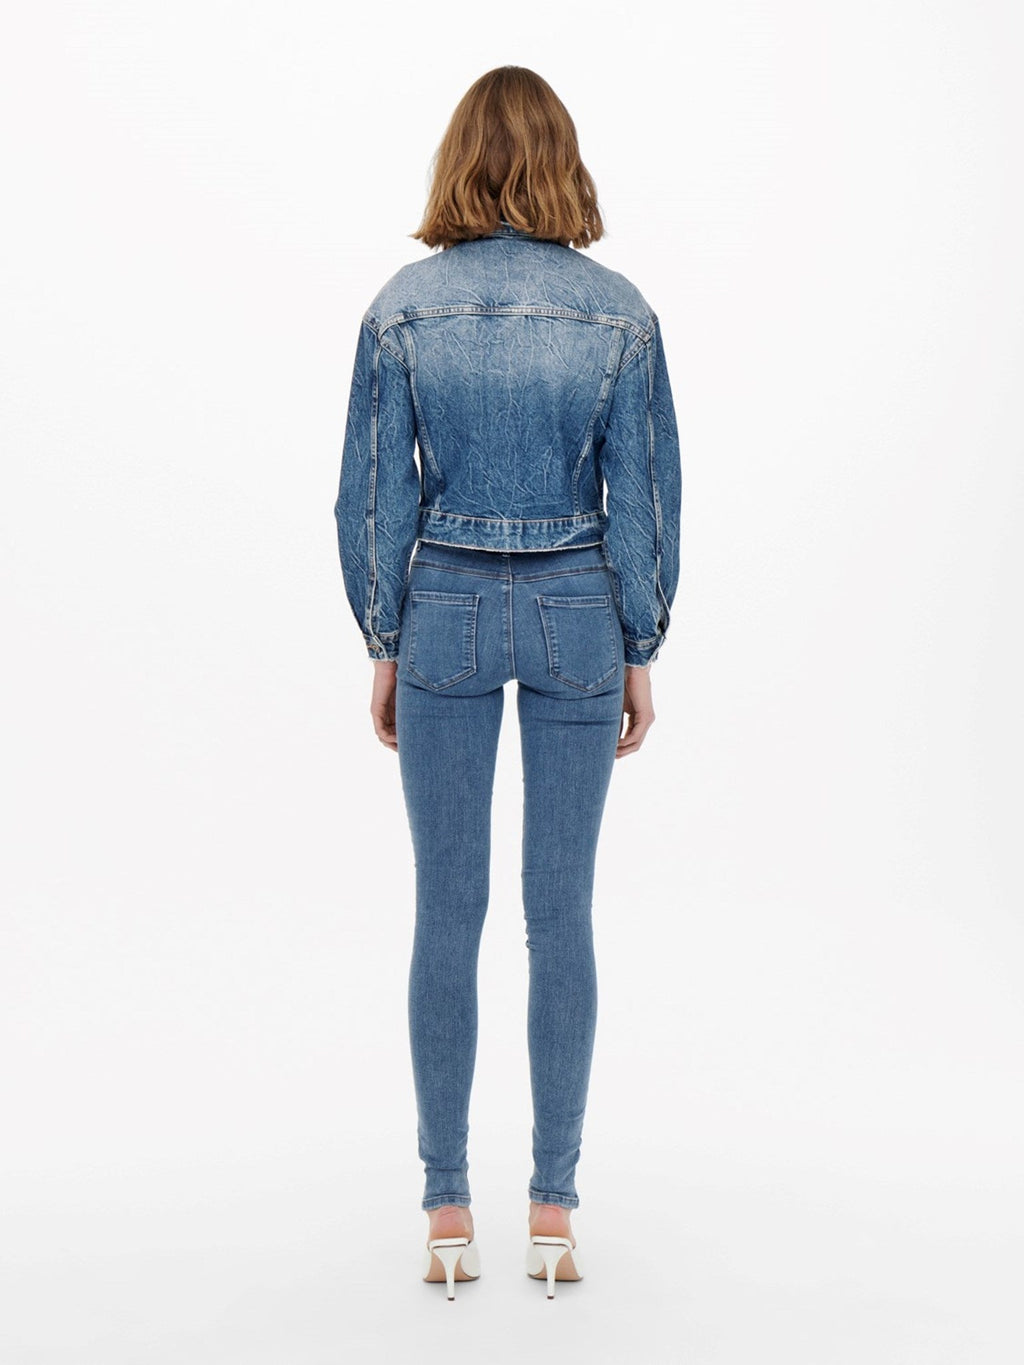 Jeans Fit Skinny Báisteach - Denim Blue